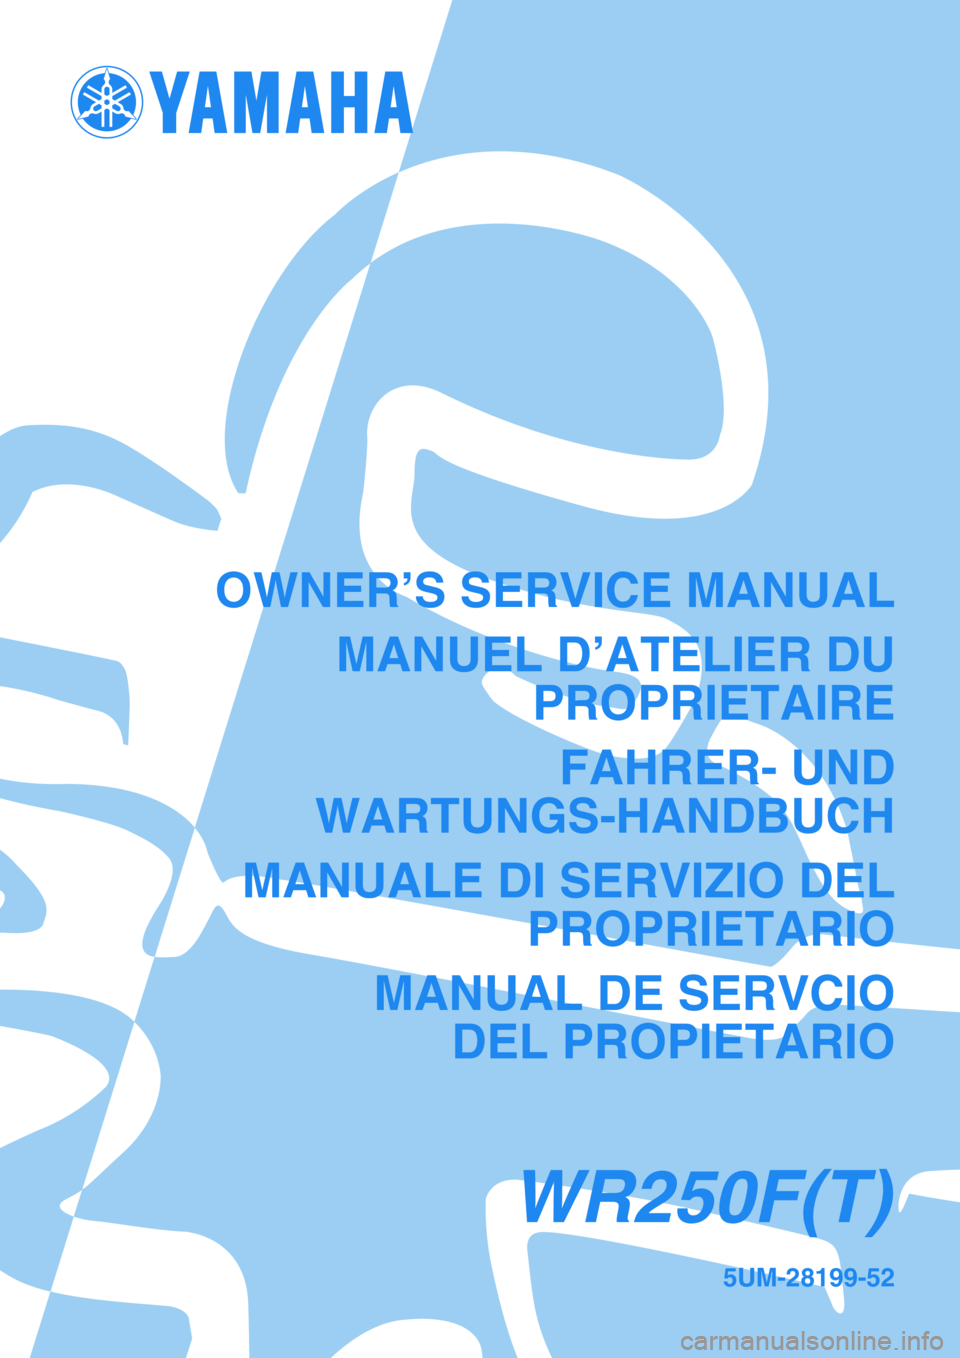 YAMAHA WR 250F 2005  Manuale de Empleo (in Spanish) 5UM-28199-52
WR250F(T)
OWNER’S SERVICE MANUAL
MANUEL D’ATELIER DU
PROPRIETAIRE
FAHRER- UND
WARTUNGS-HANDBUCH
MANUALE DI SERVIZIO DEL
PROPRIETARIO
MANUAL DE SERVCIO
DEL PROPIETARIO 